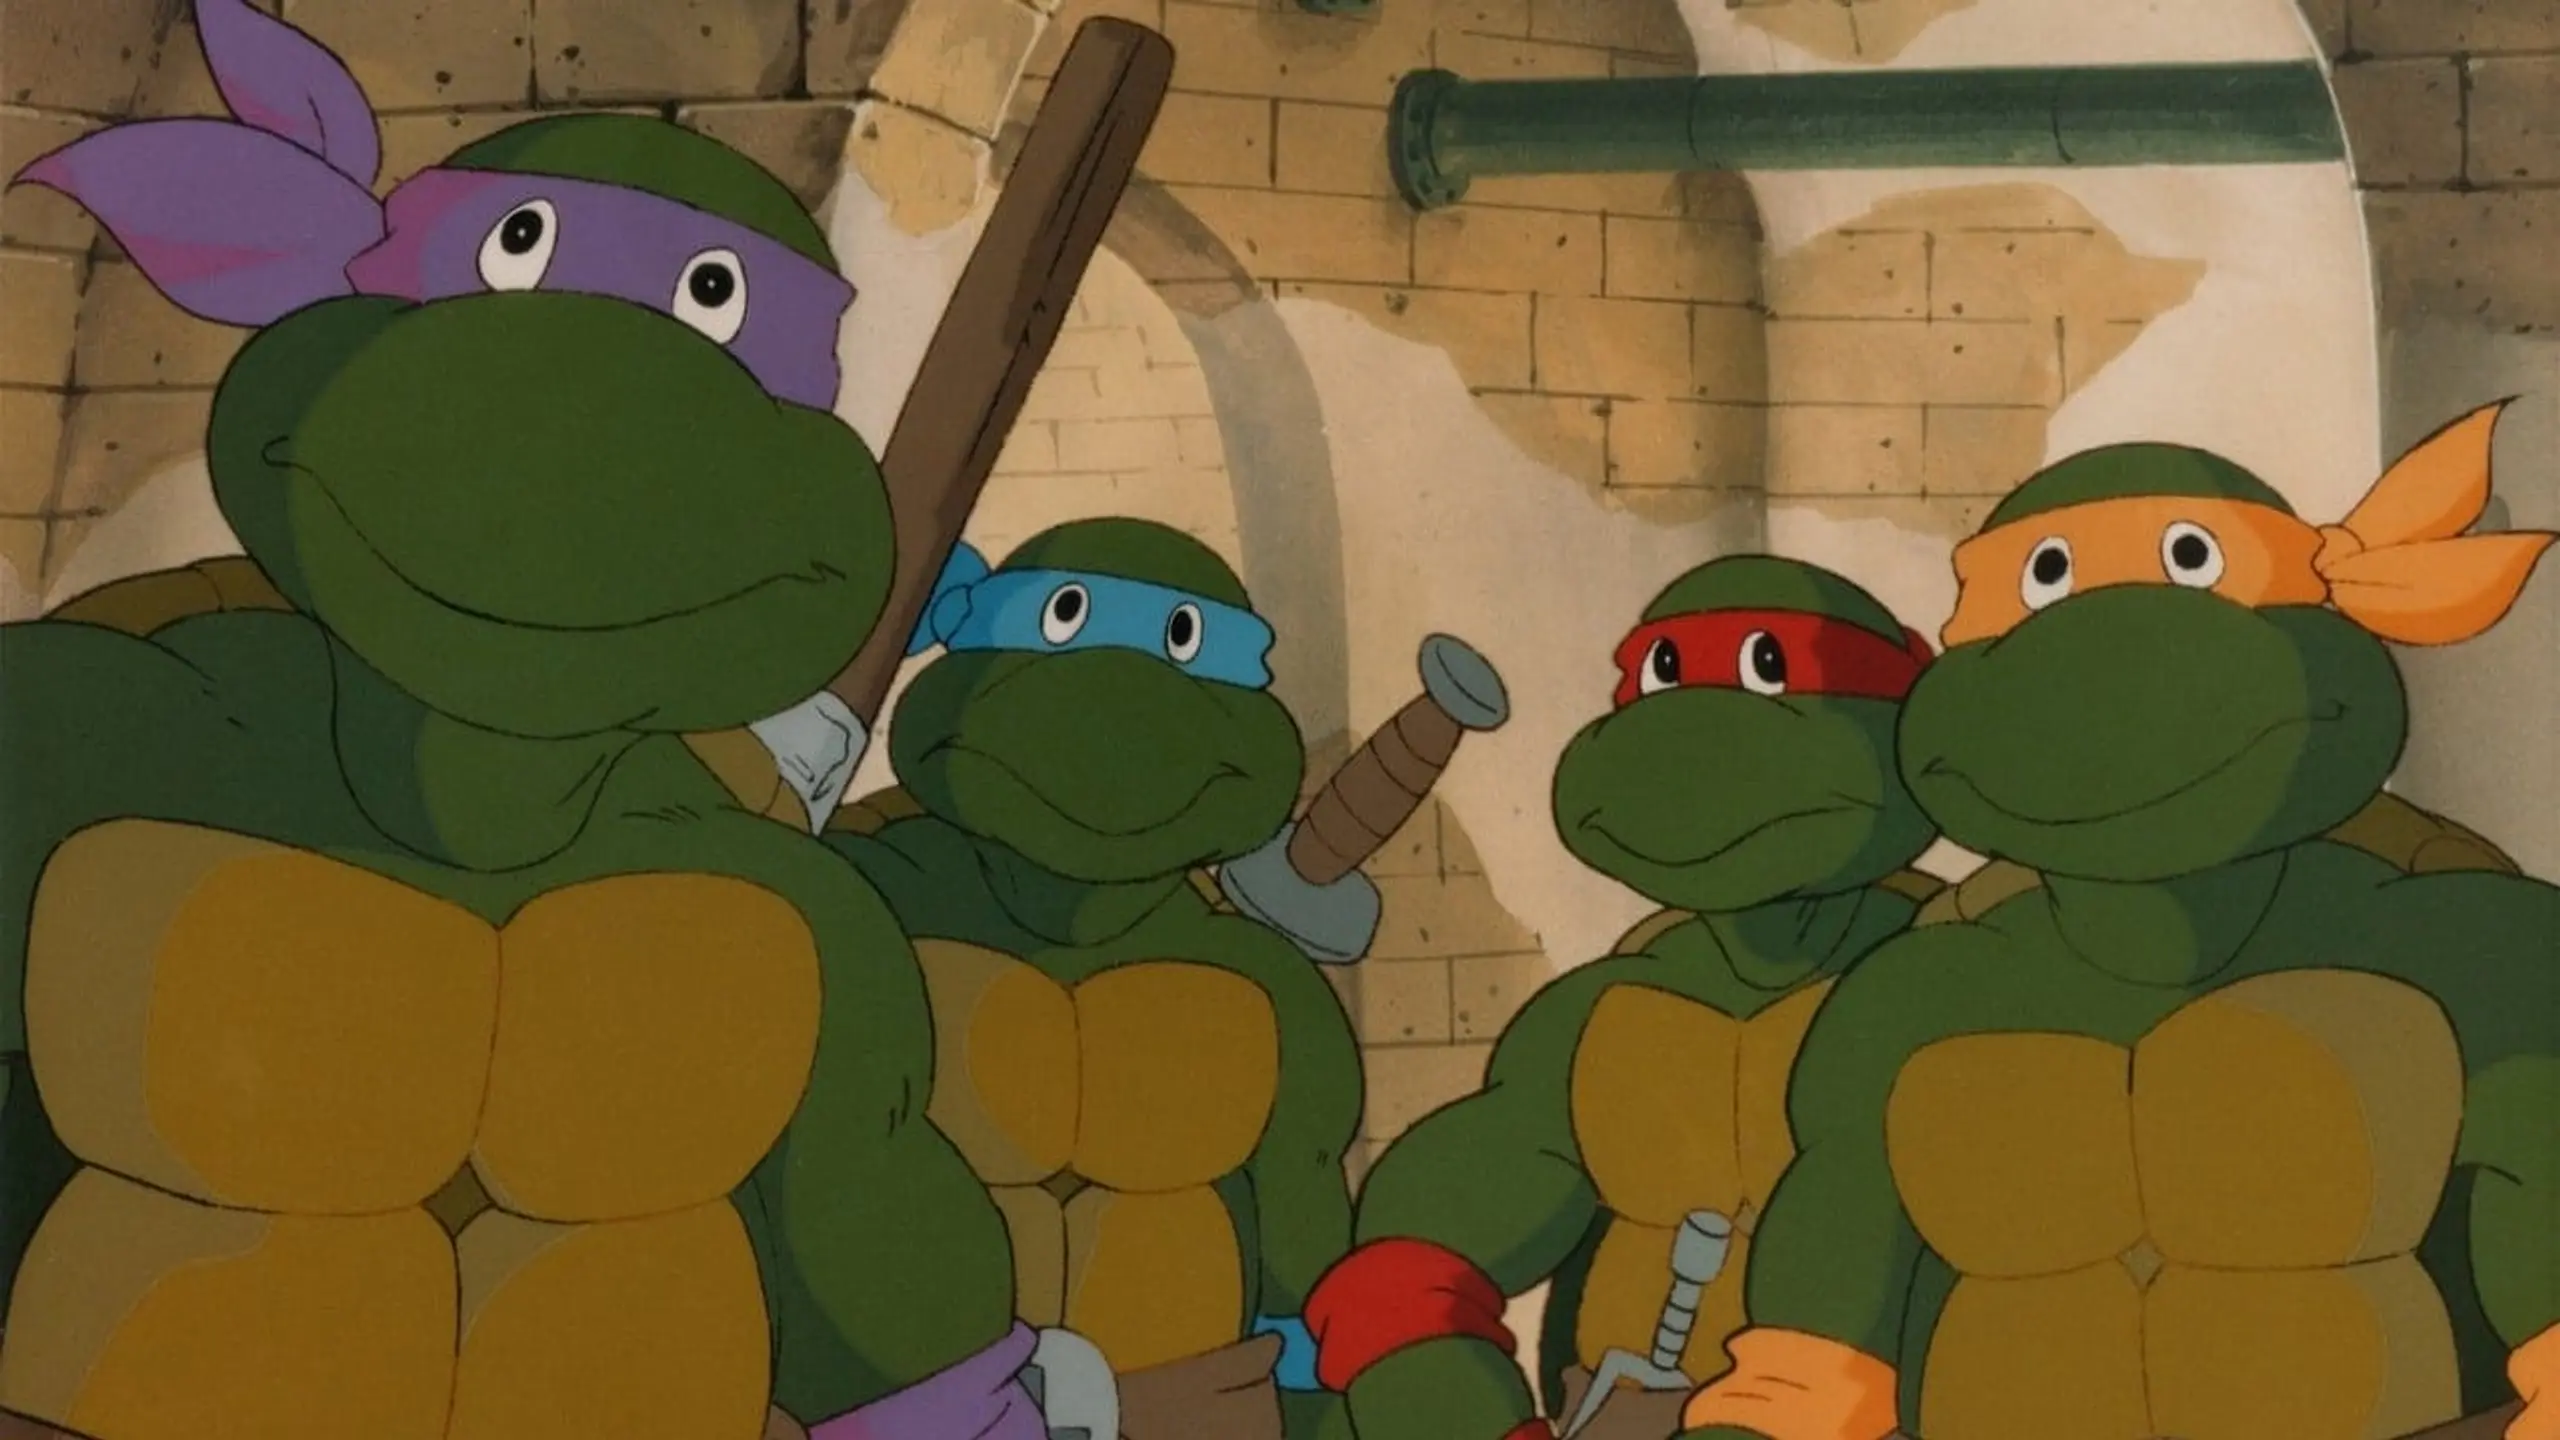 Teenage Mutant Ninja Turtles: The Epic Begins